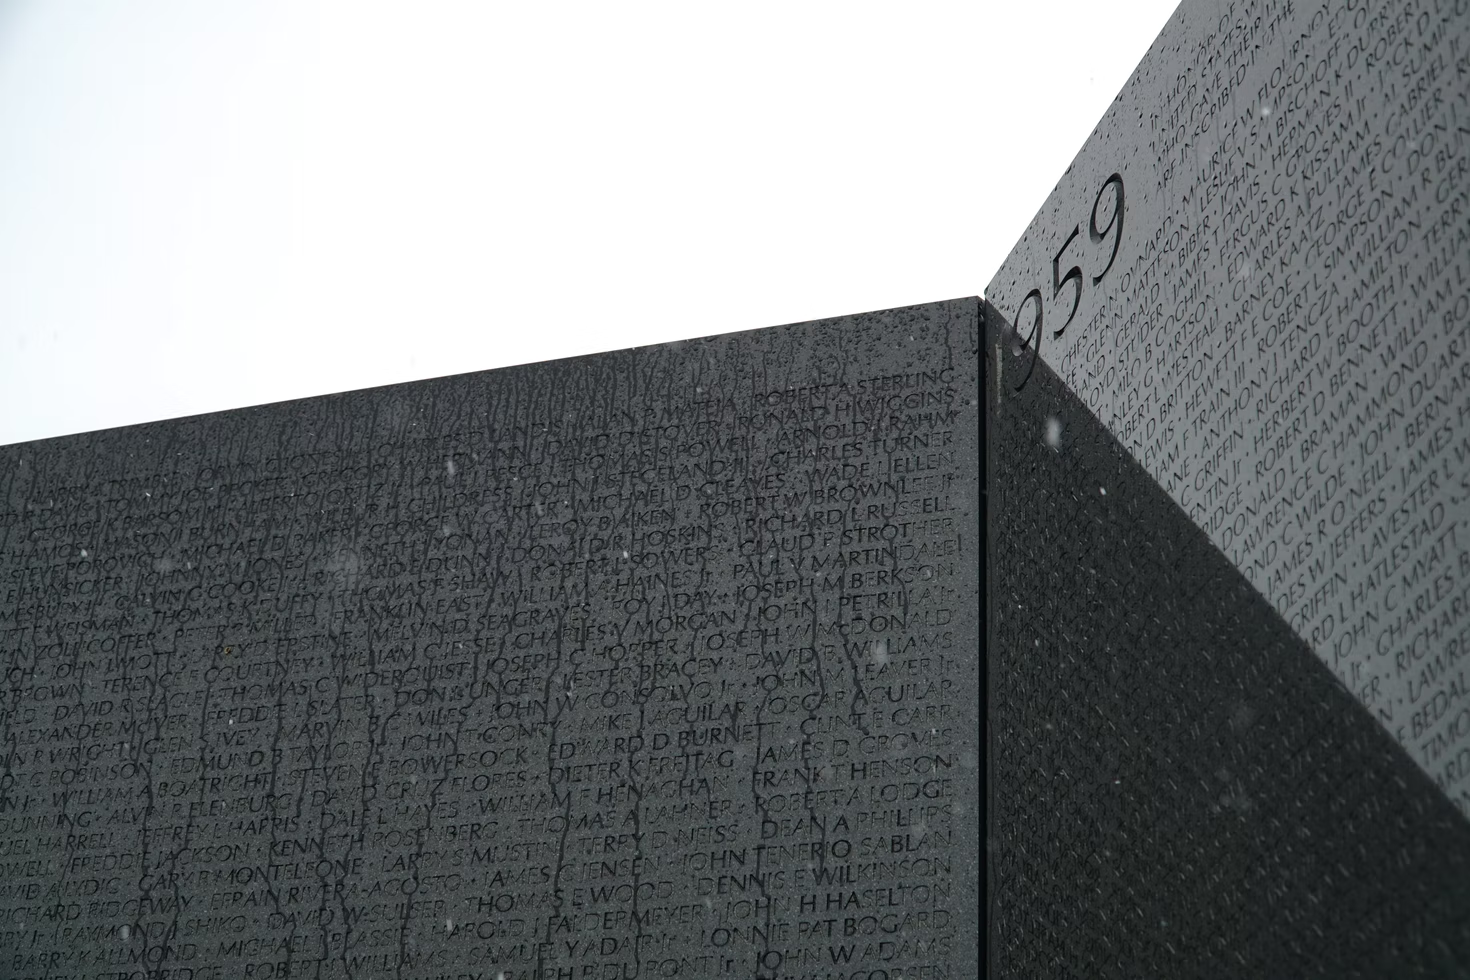 The Vietnam War Memorial in Washington, DC